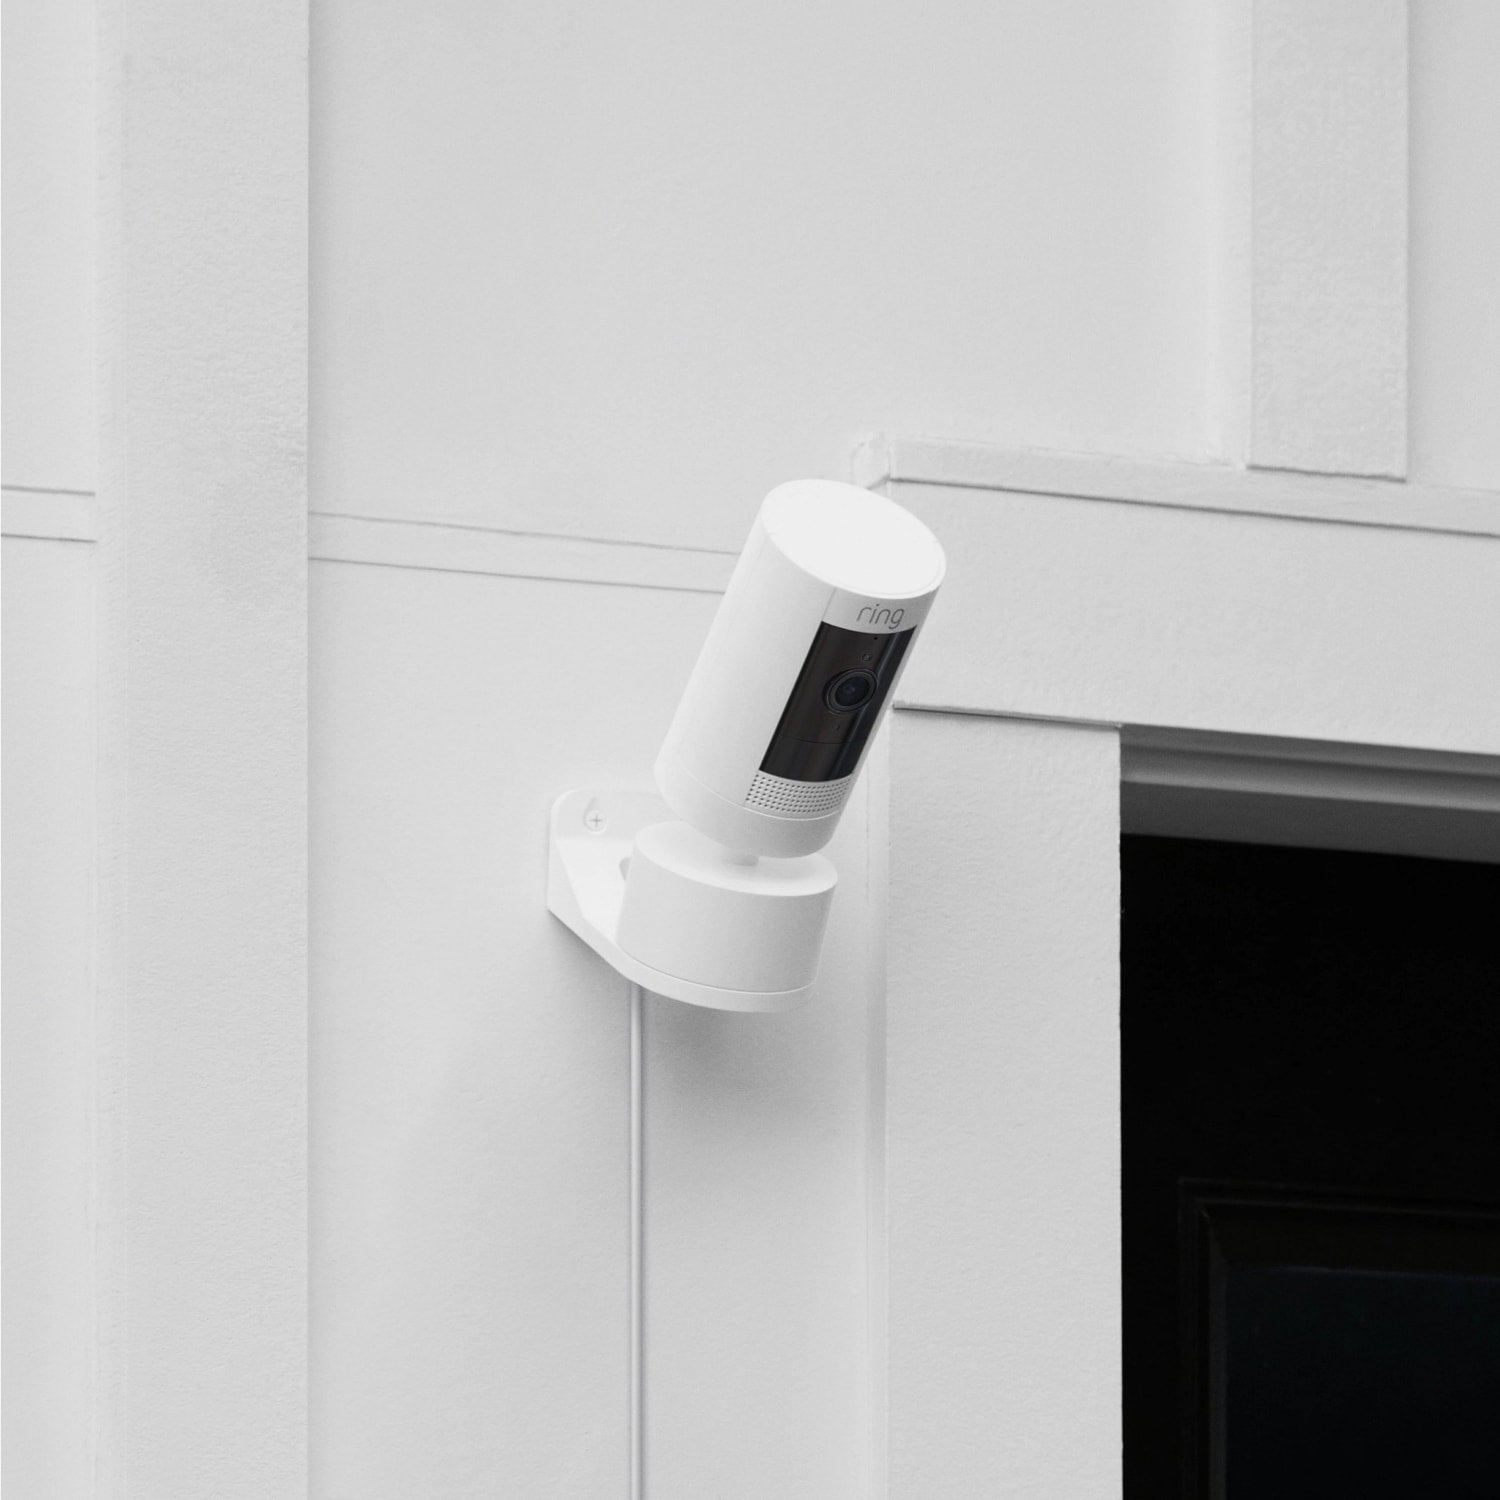 Stick Up Cam Plug-In with Pan-Tilt - Stick Up Cam Plug-In with Pan-Tilt in white mounted on exterior wall next to garage door.